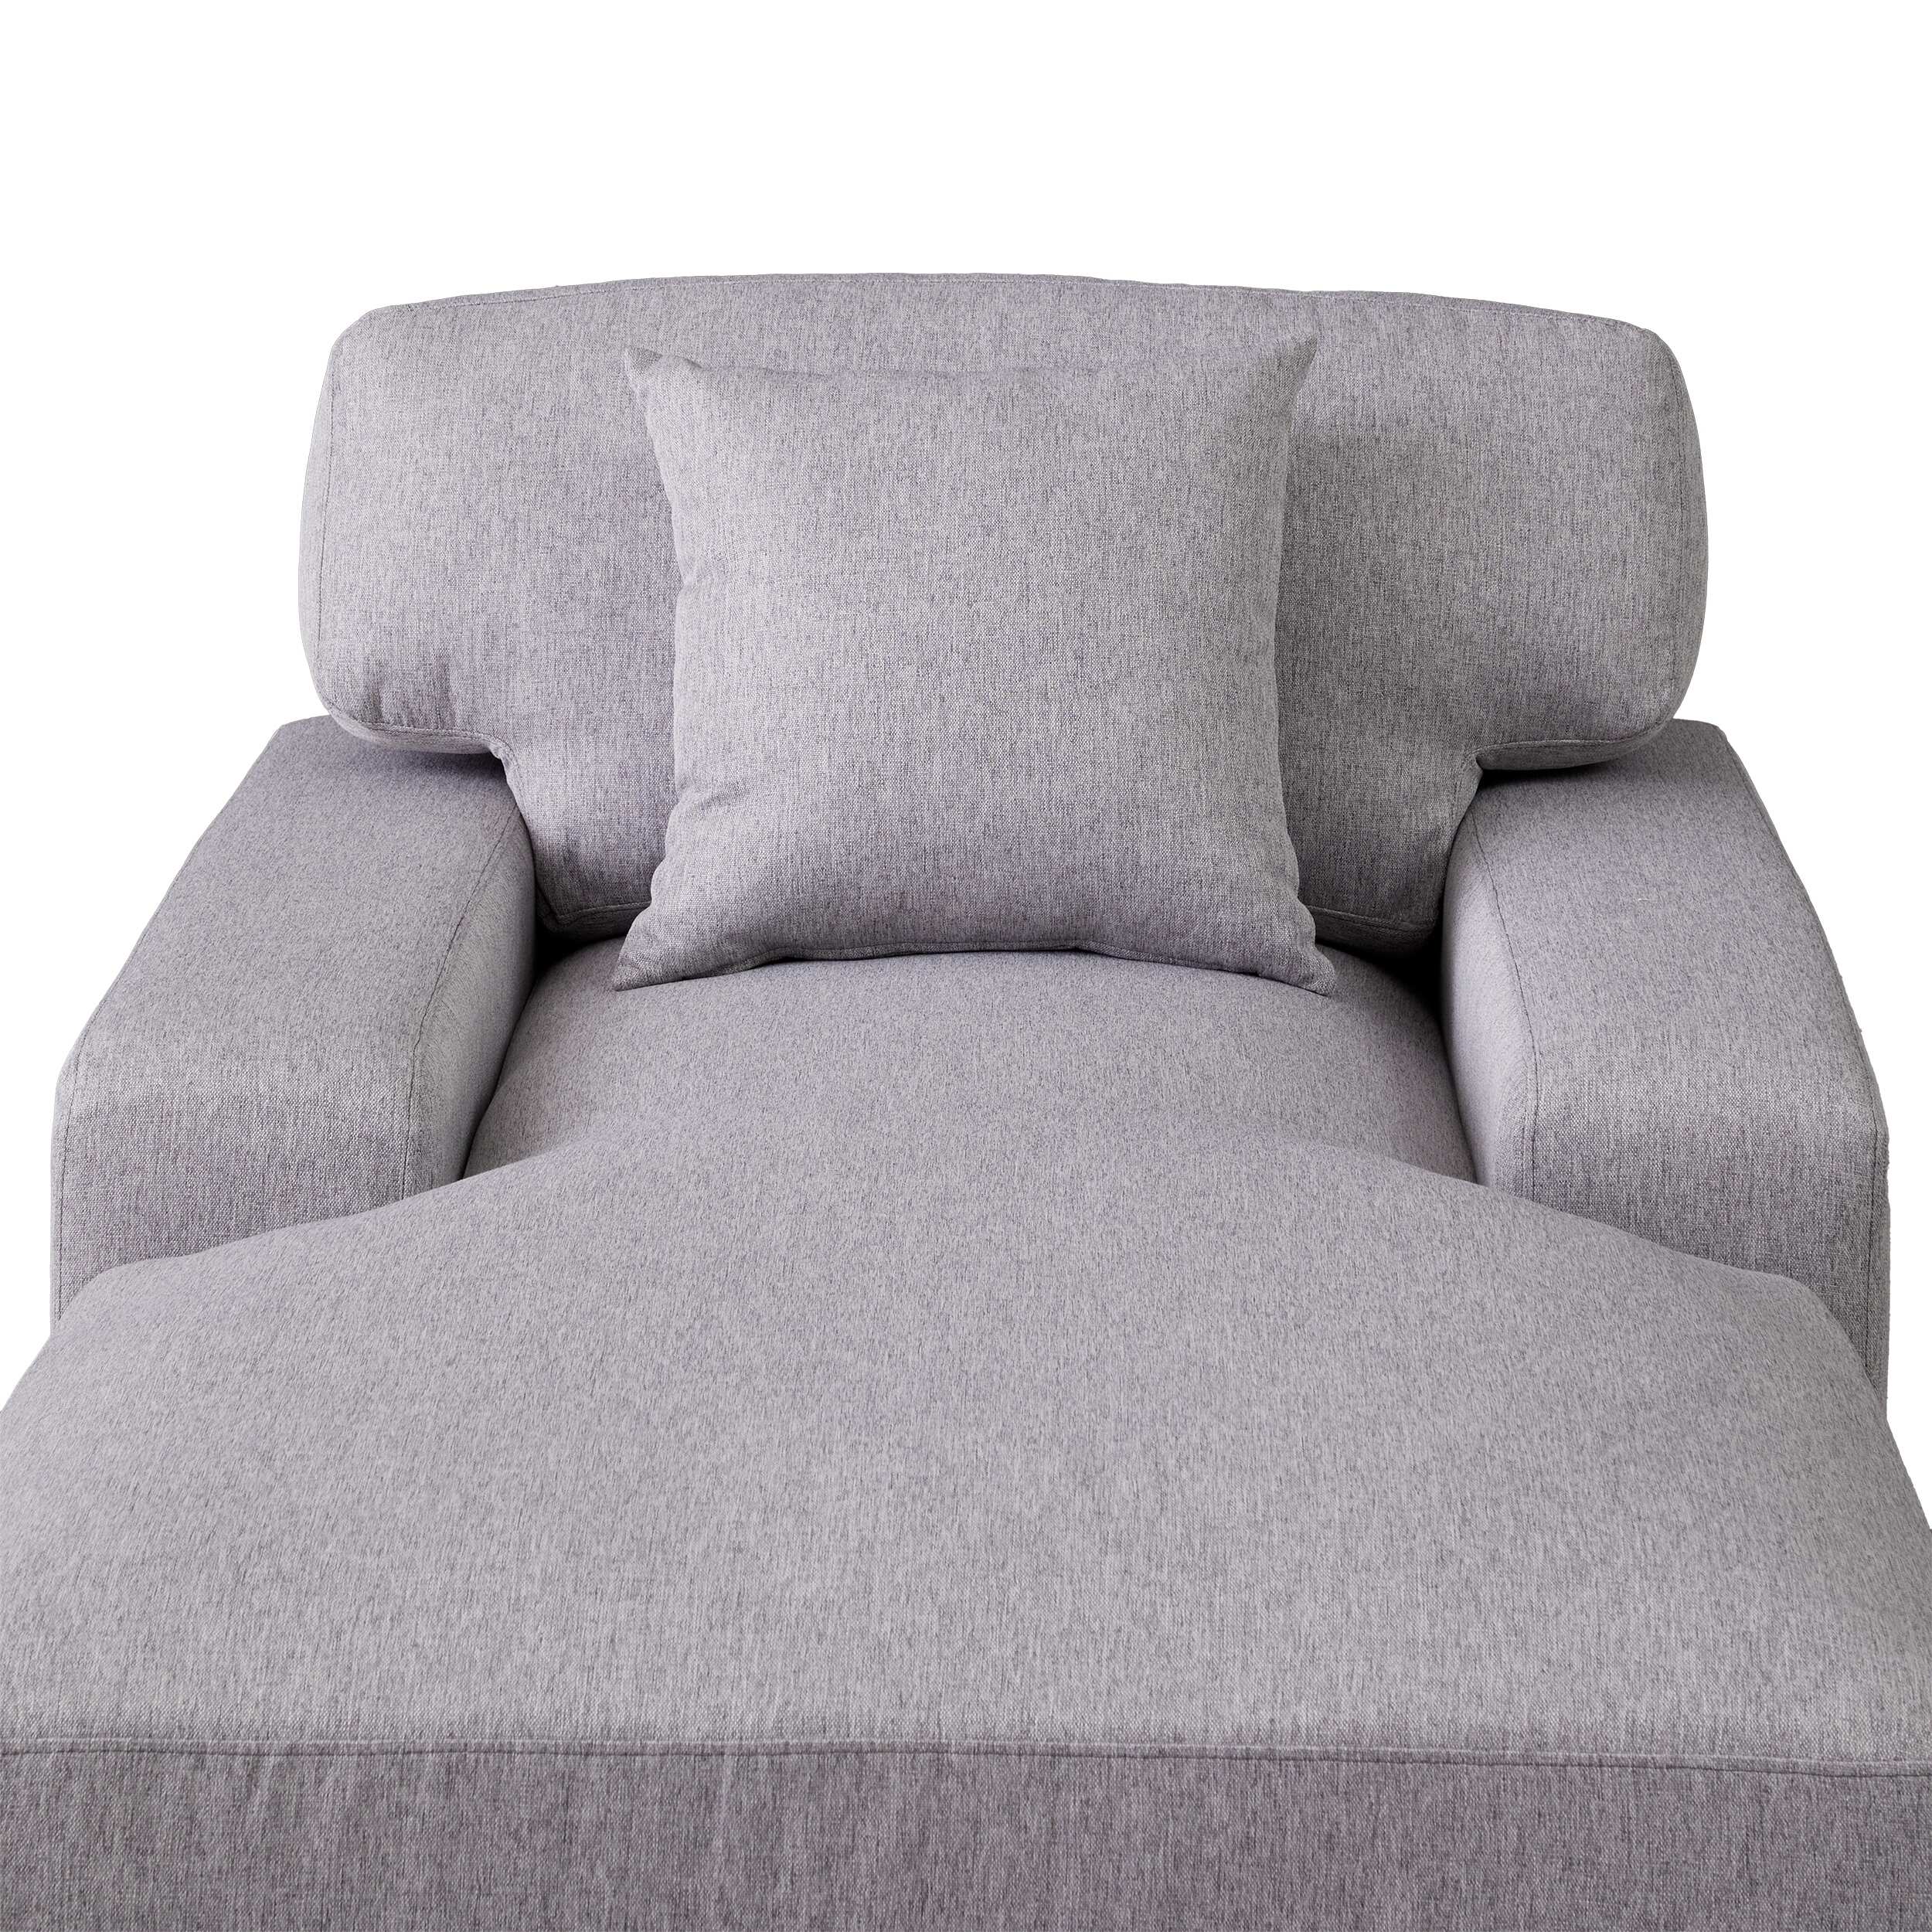 Velvet Oversized Chaise Lounger Comfort Sleeper Sofa with Pillow for Livingroom Modern Square Arms Chair Bed w/Soild Wood Legs